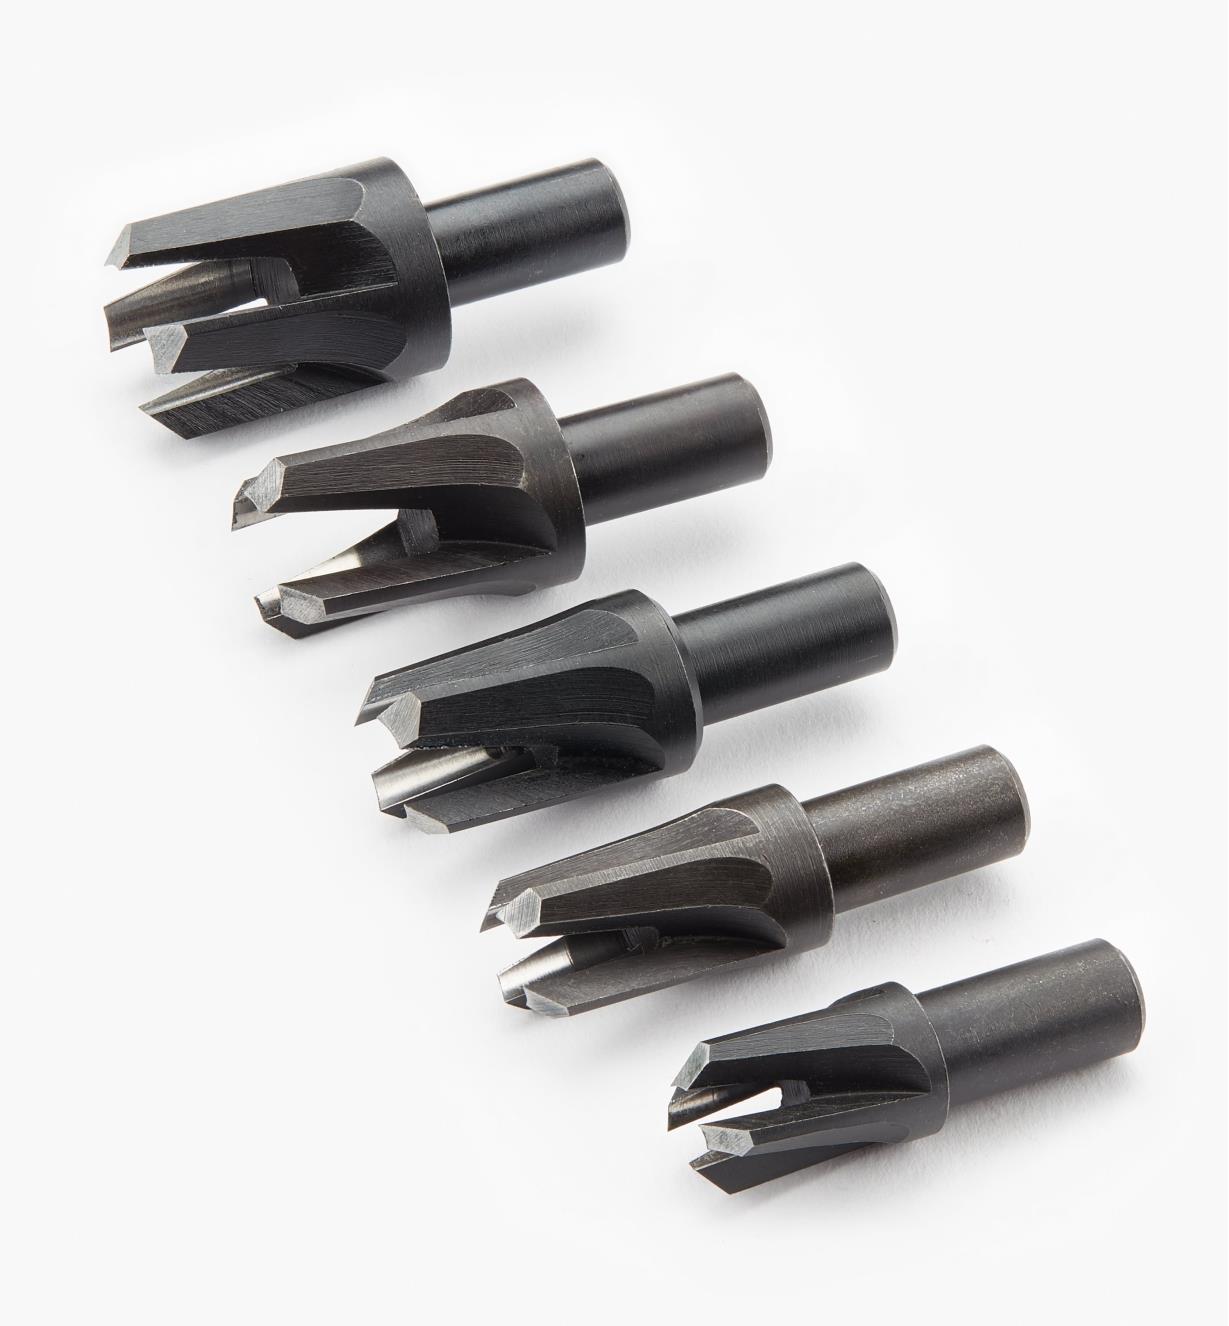 05J0511 - Set of 5 Imperial Veritas Snug-Plug Cutters (1/4", 5/16", 3/8", 7/16", 1/2")